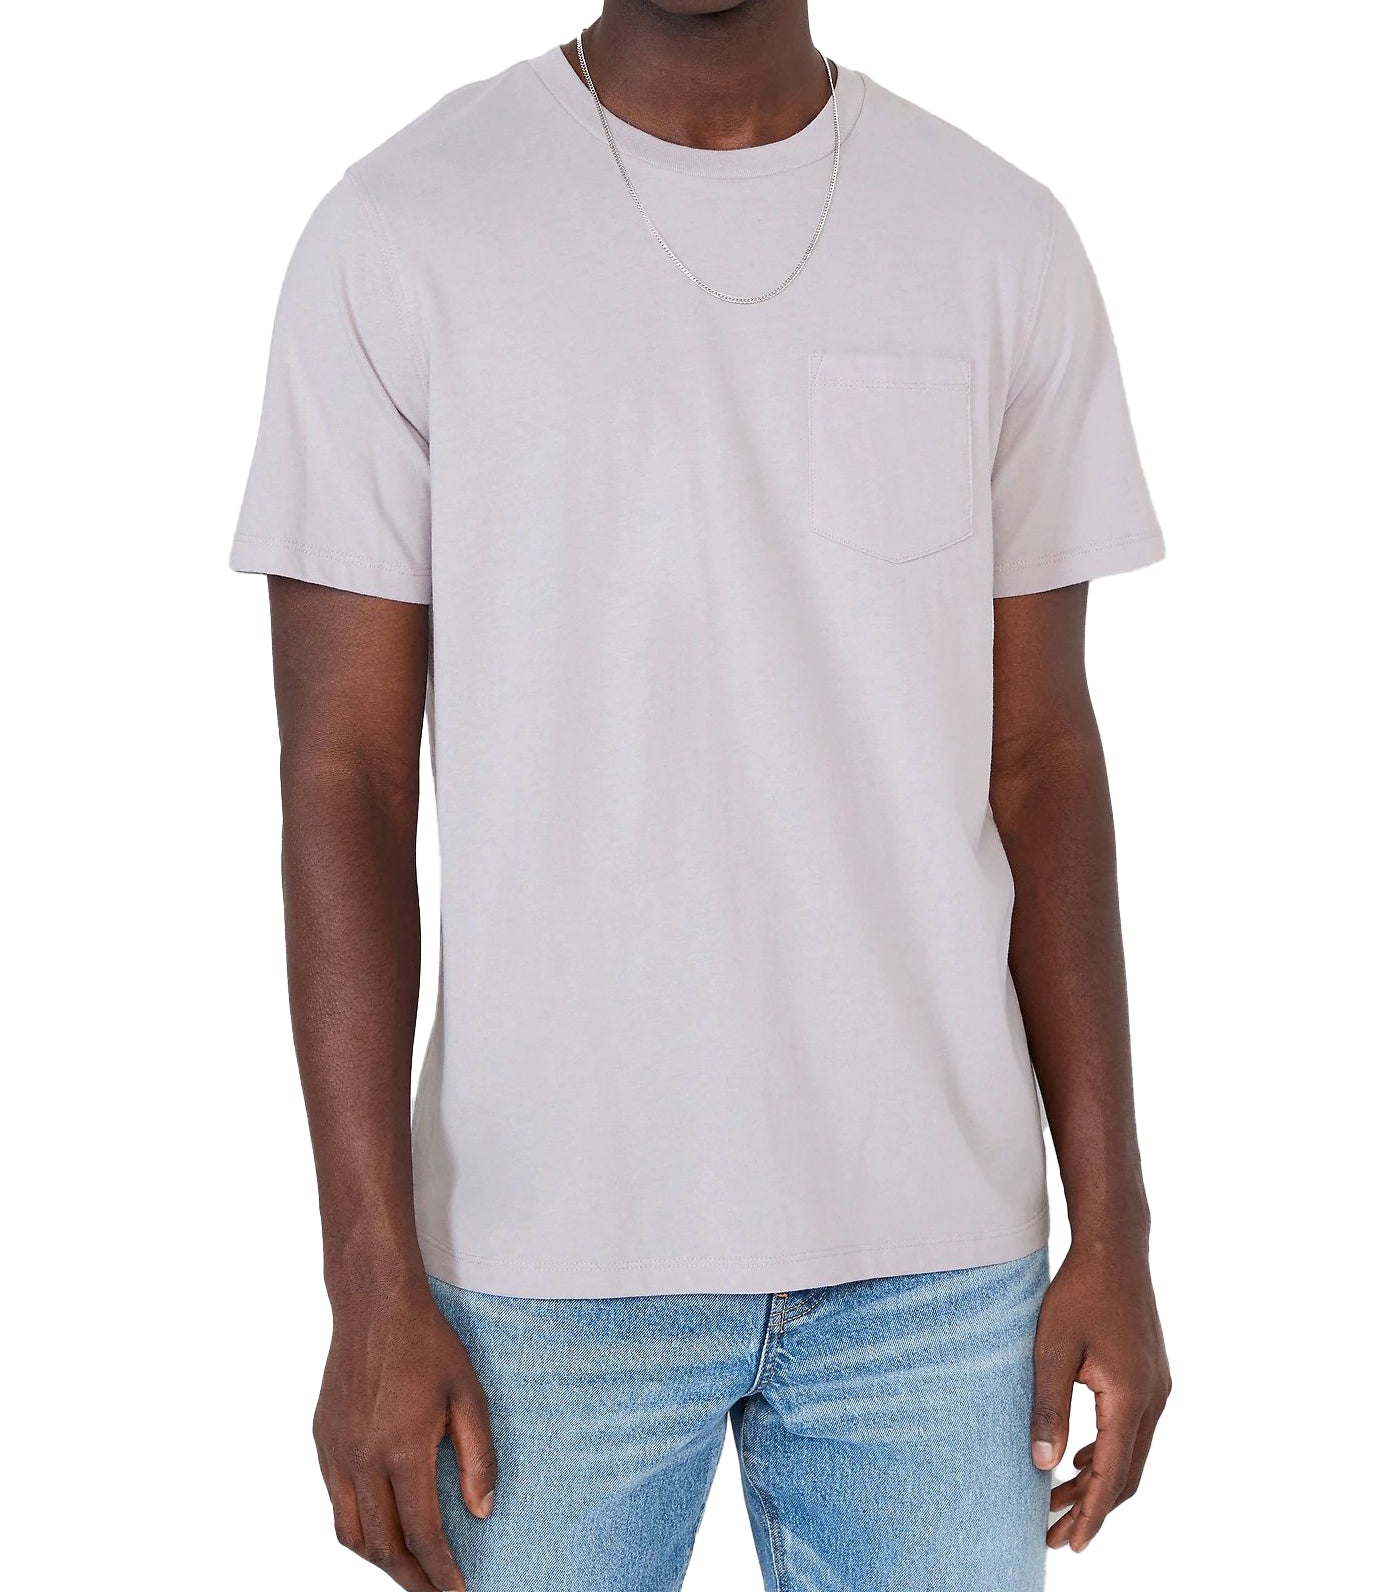 Soft-Washed Chest-Pocket Crew-Neck T-Shirt for Men Bellflower